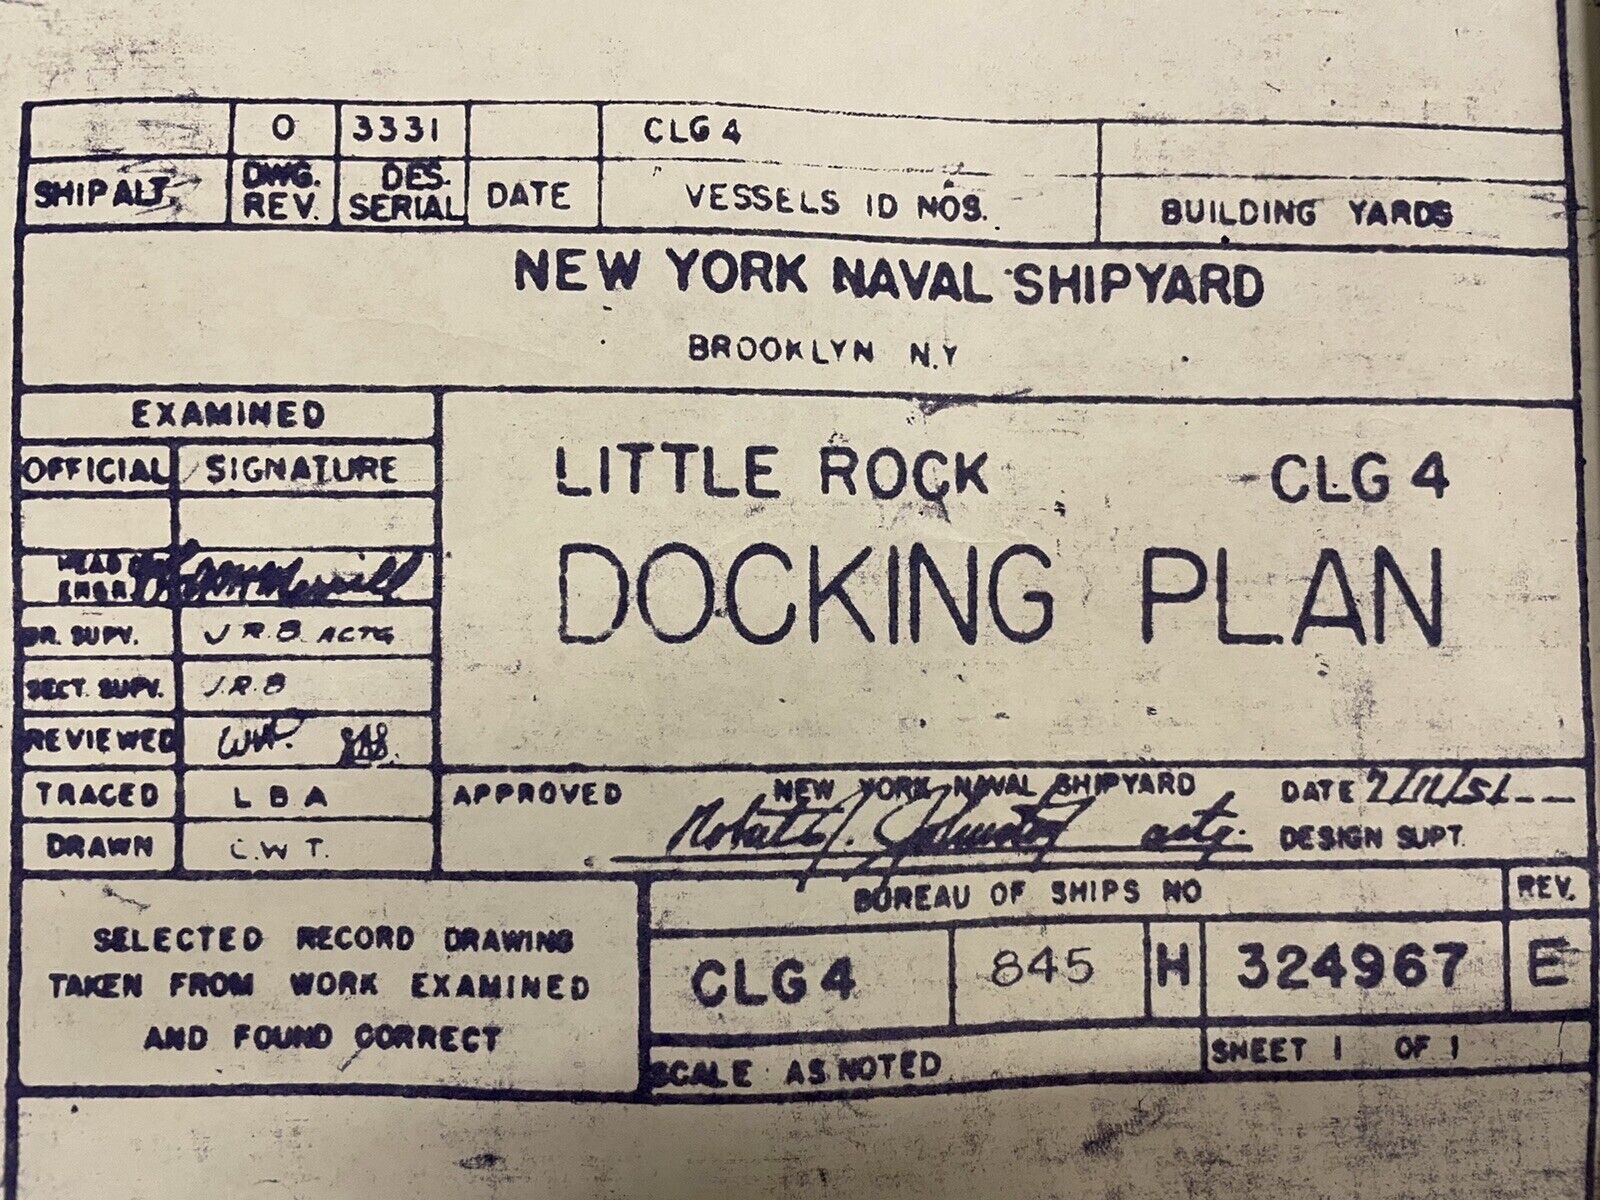 Uss Little Rock (clg-4) Docking Plan